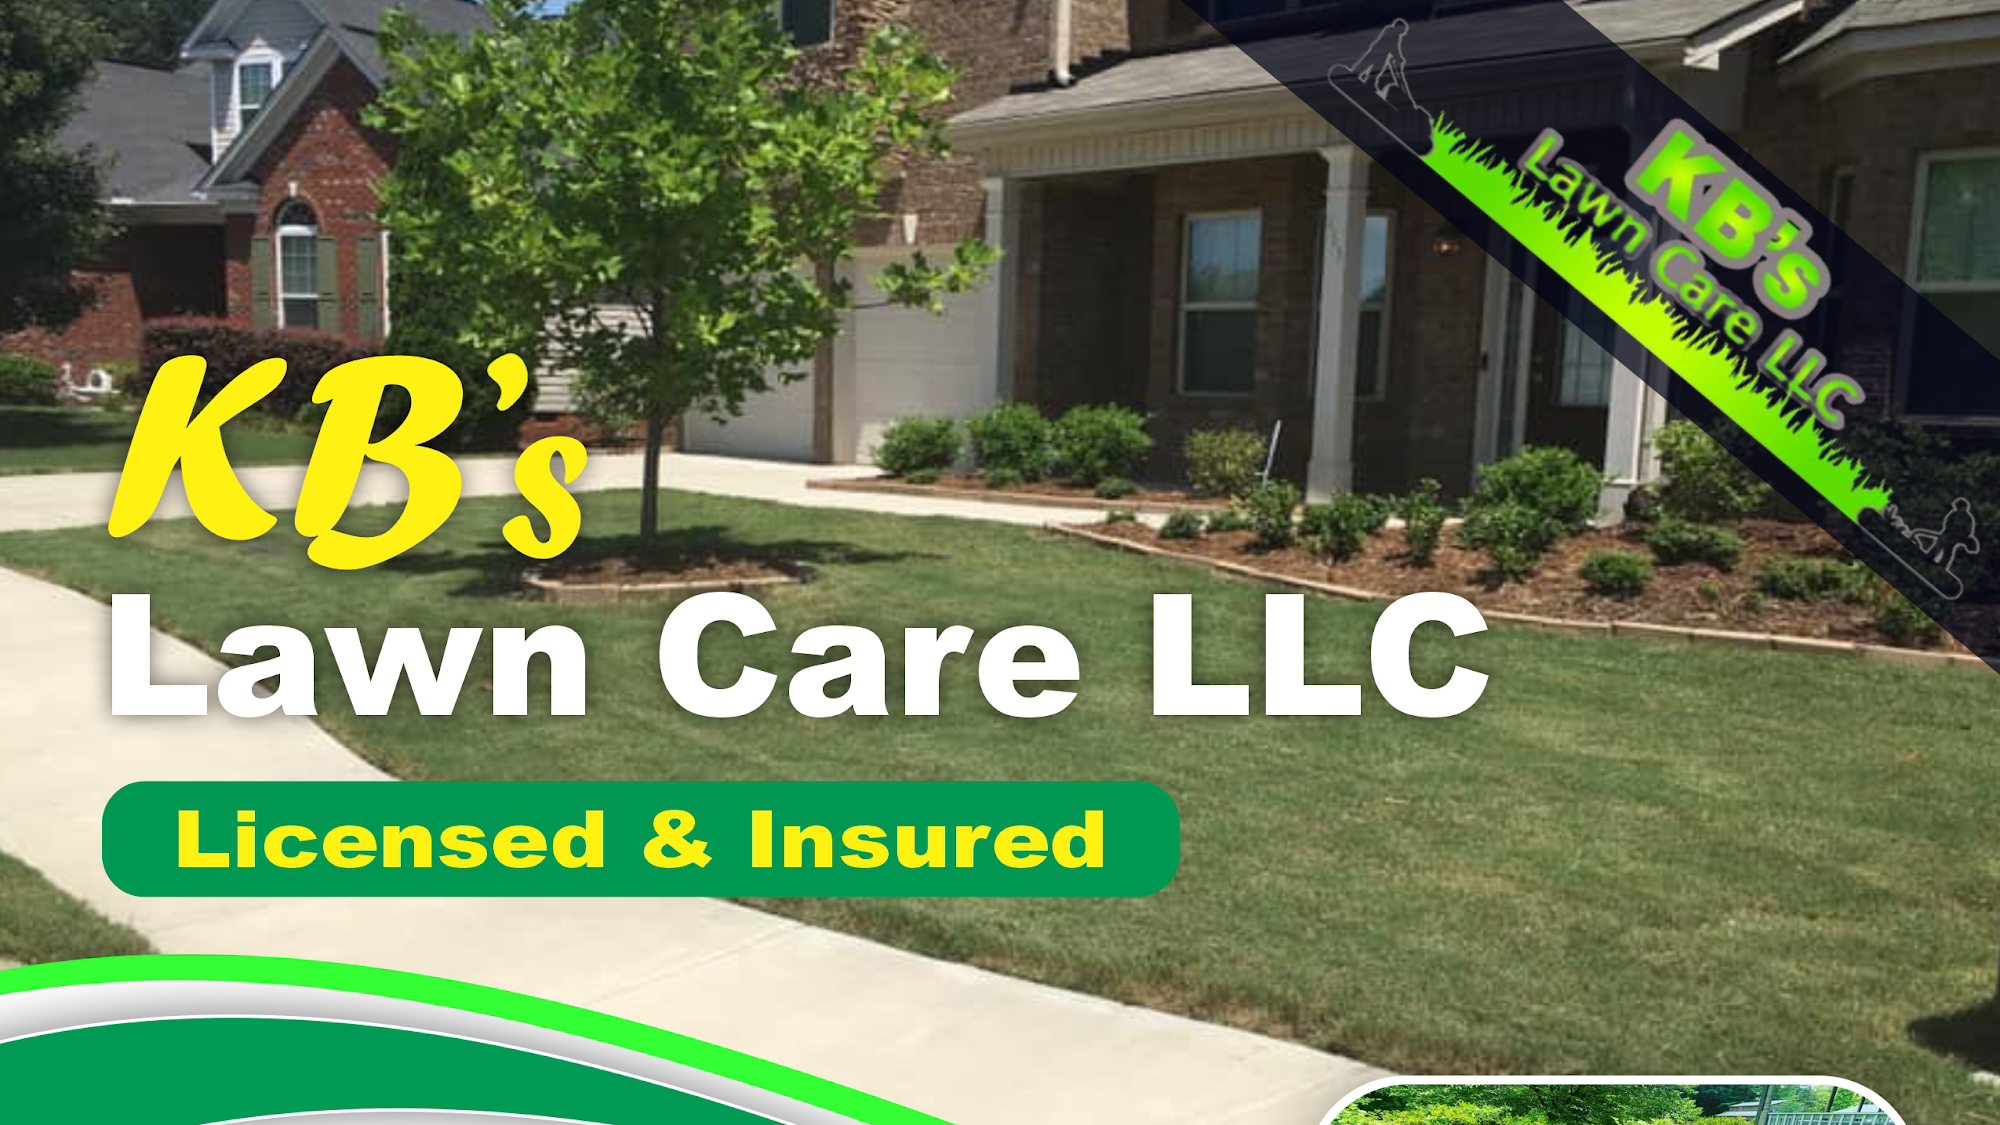 KB’s Lawn Care LLC